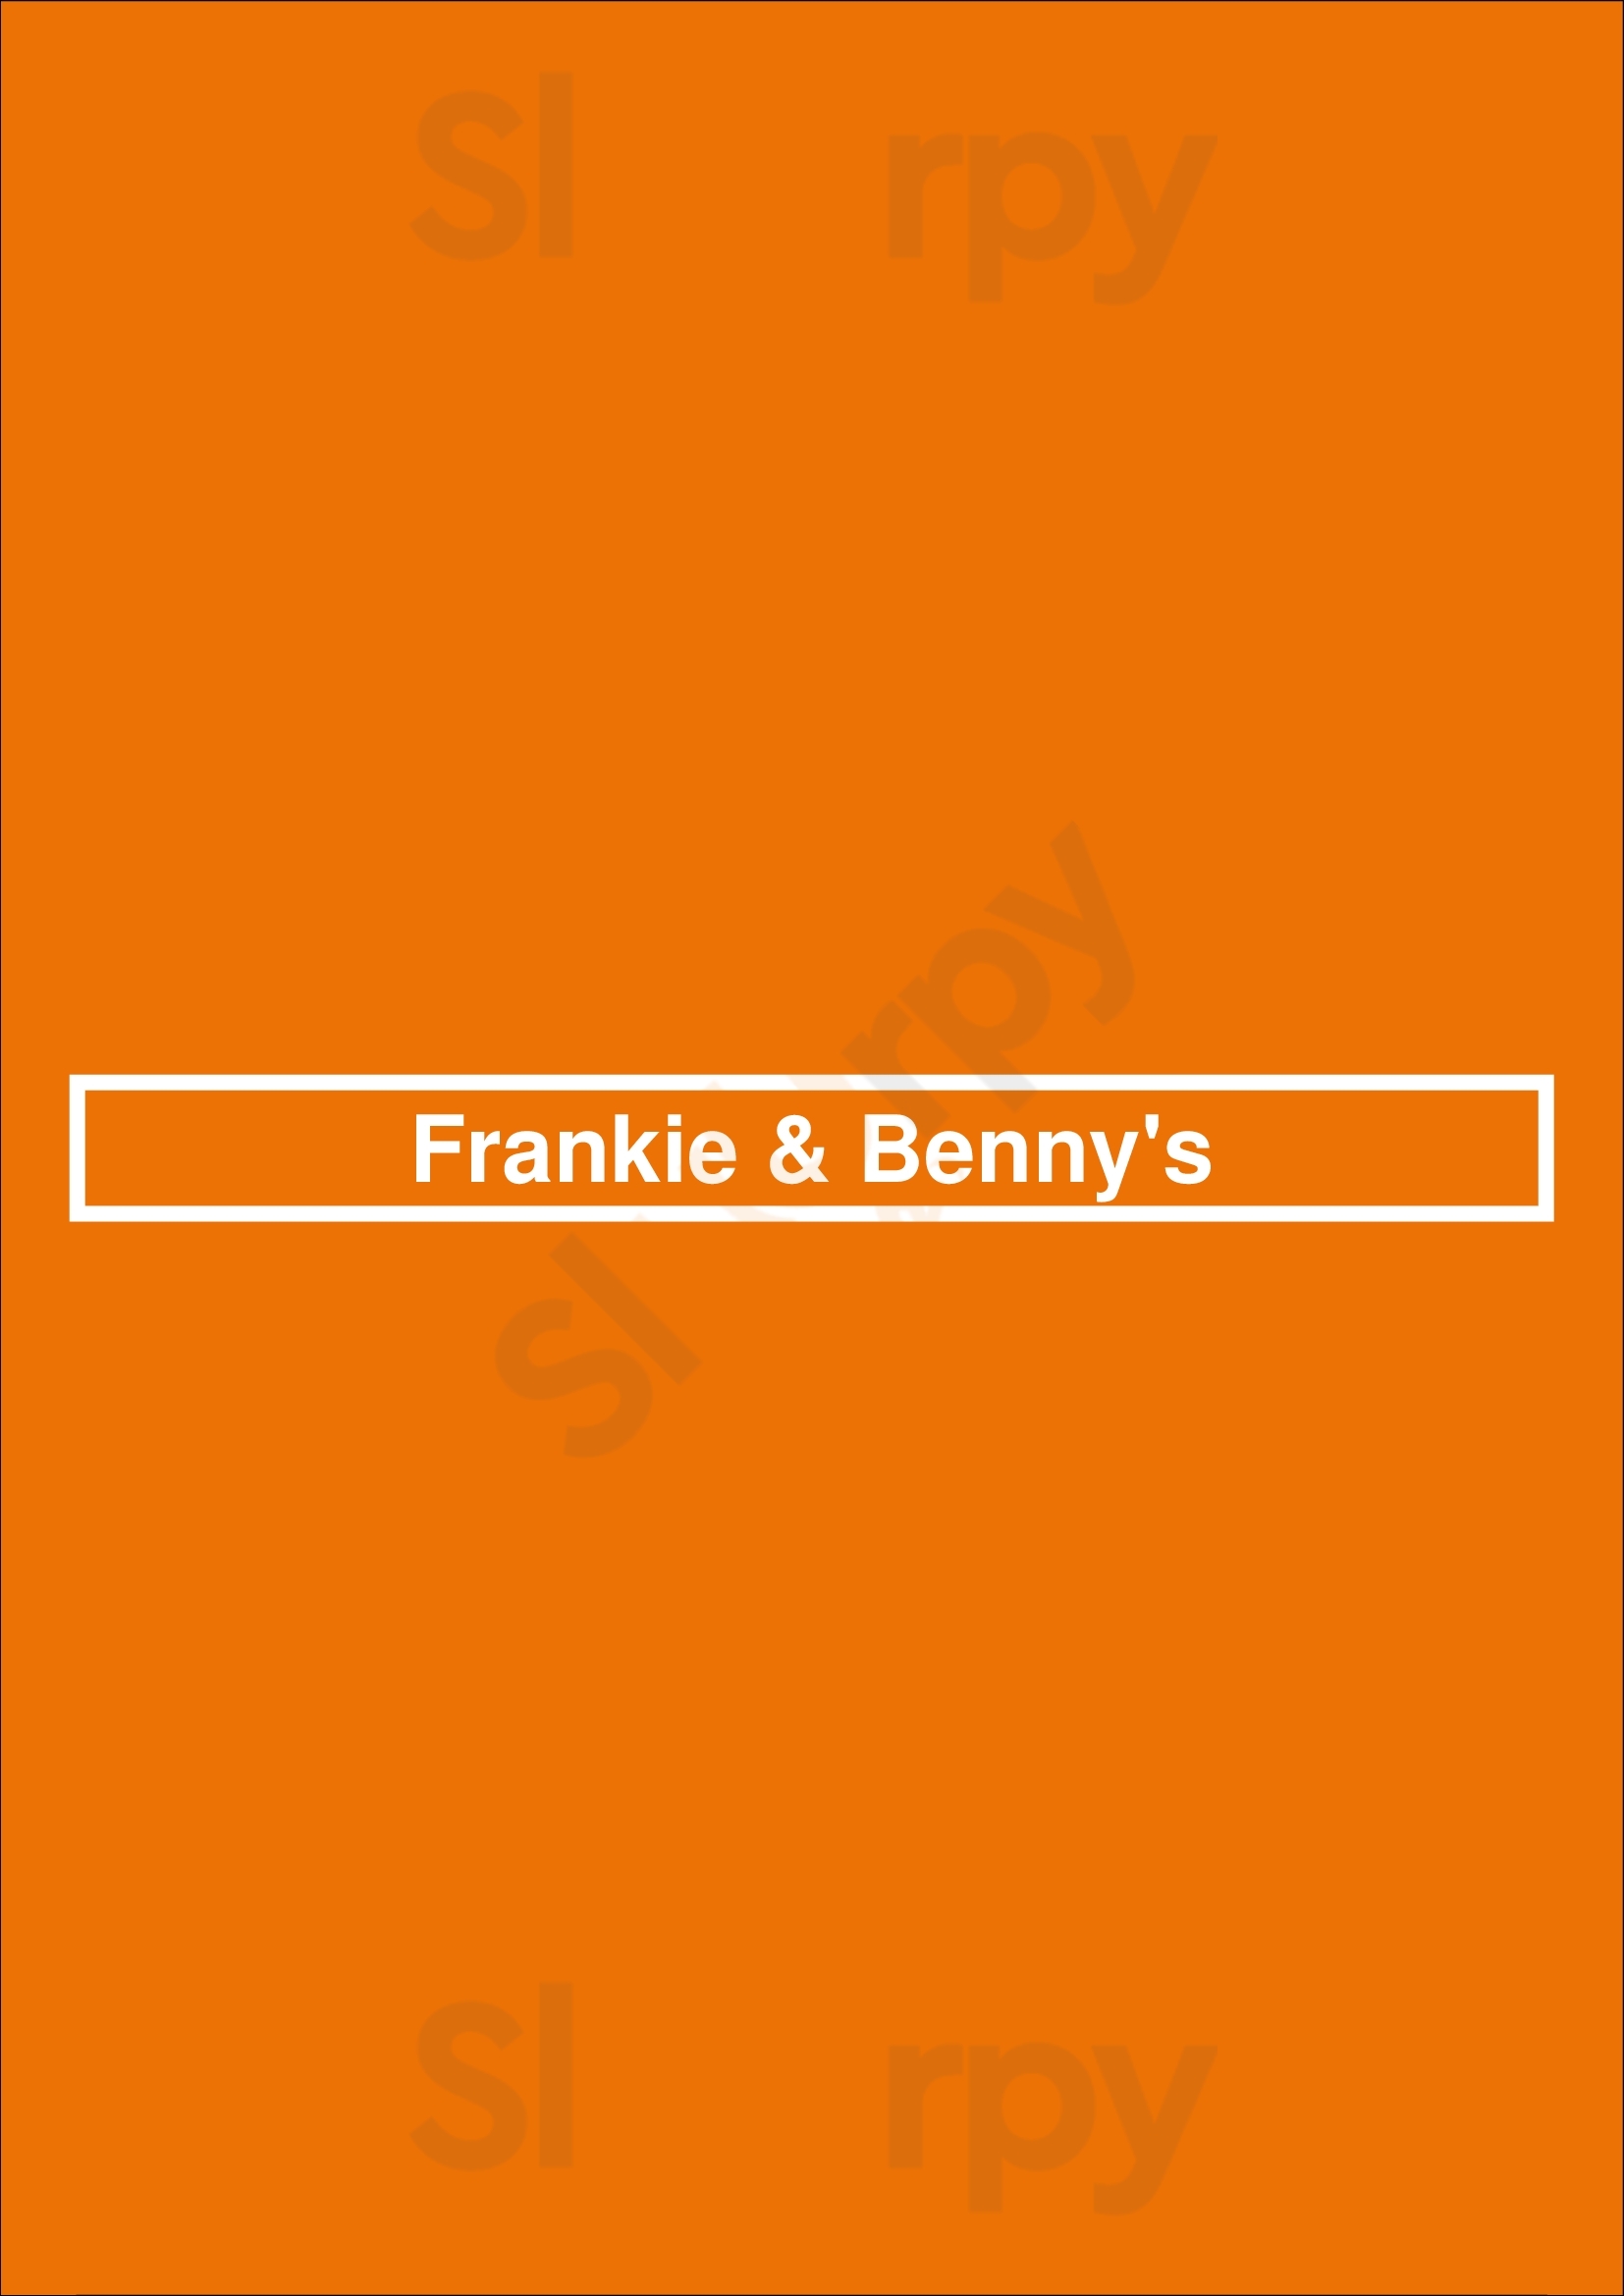 Frankie & Benny's Haverhill Menu - 1